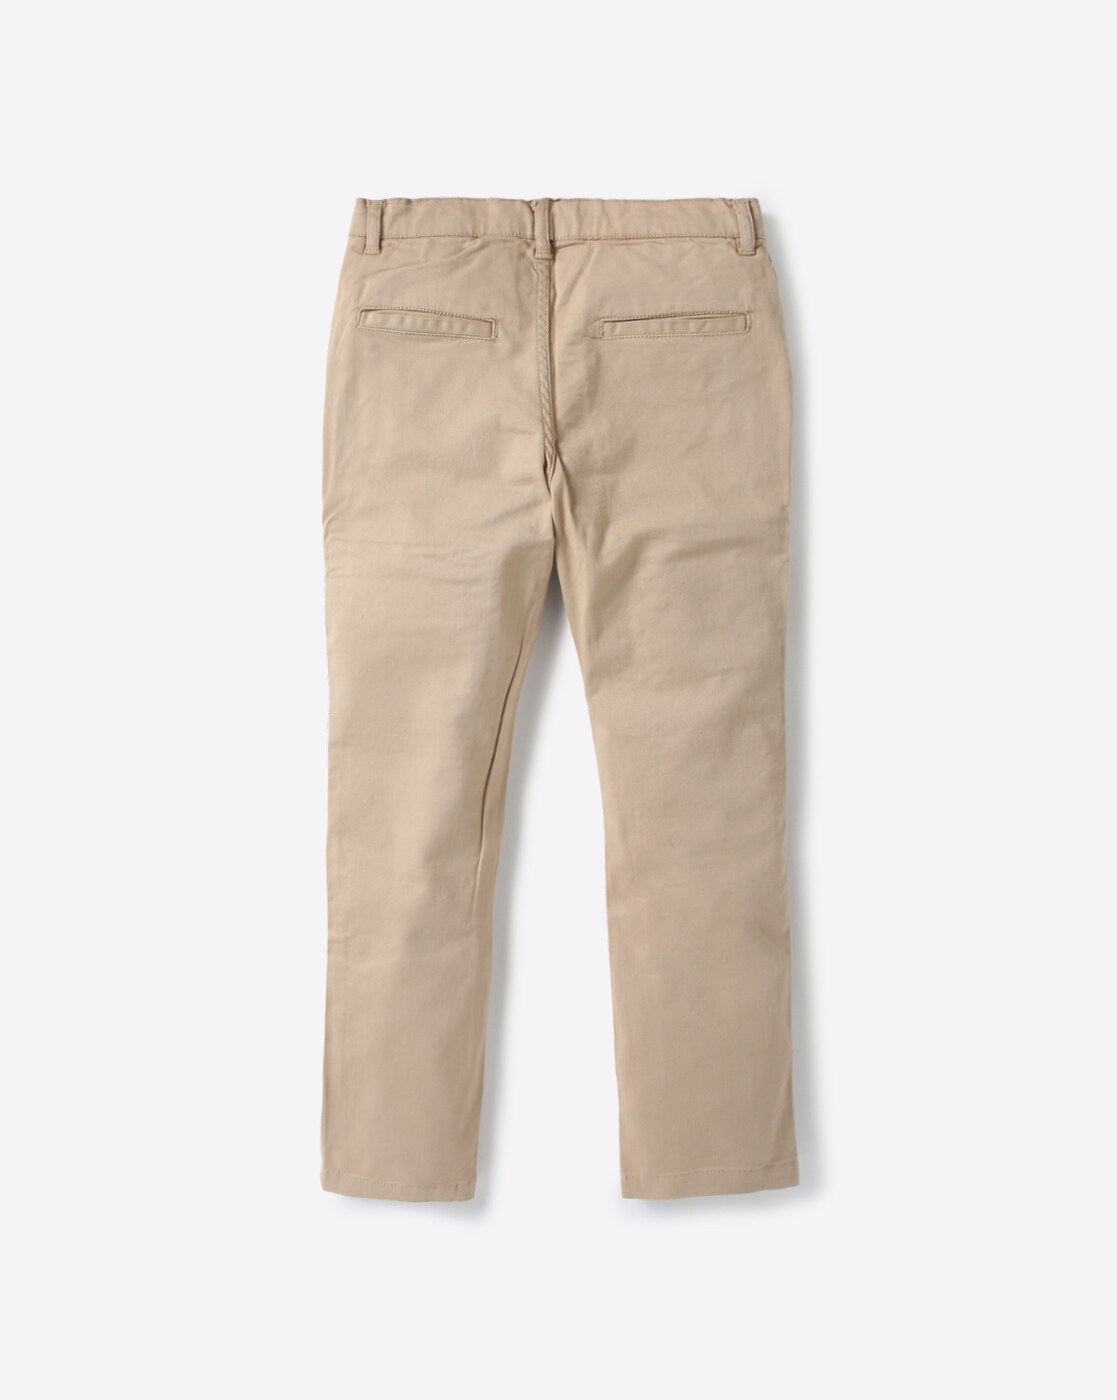 H&M Divided Camo Cargo Pants/Jeans size 6 | Camo cargo pants, Camo, Cargo  pants